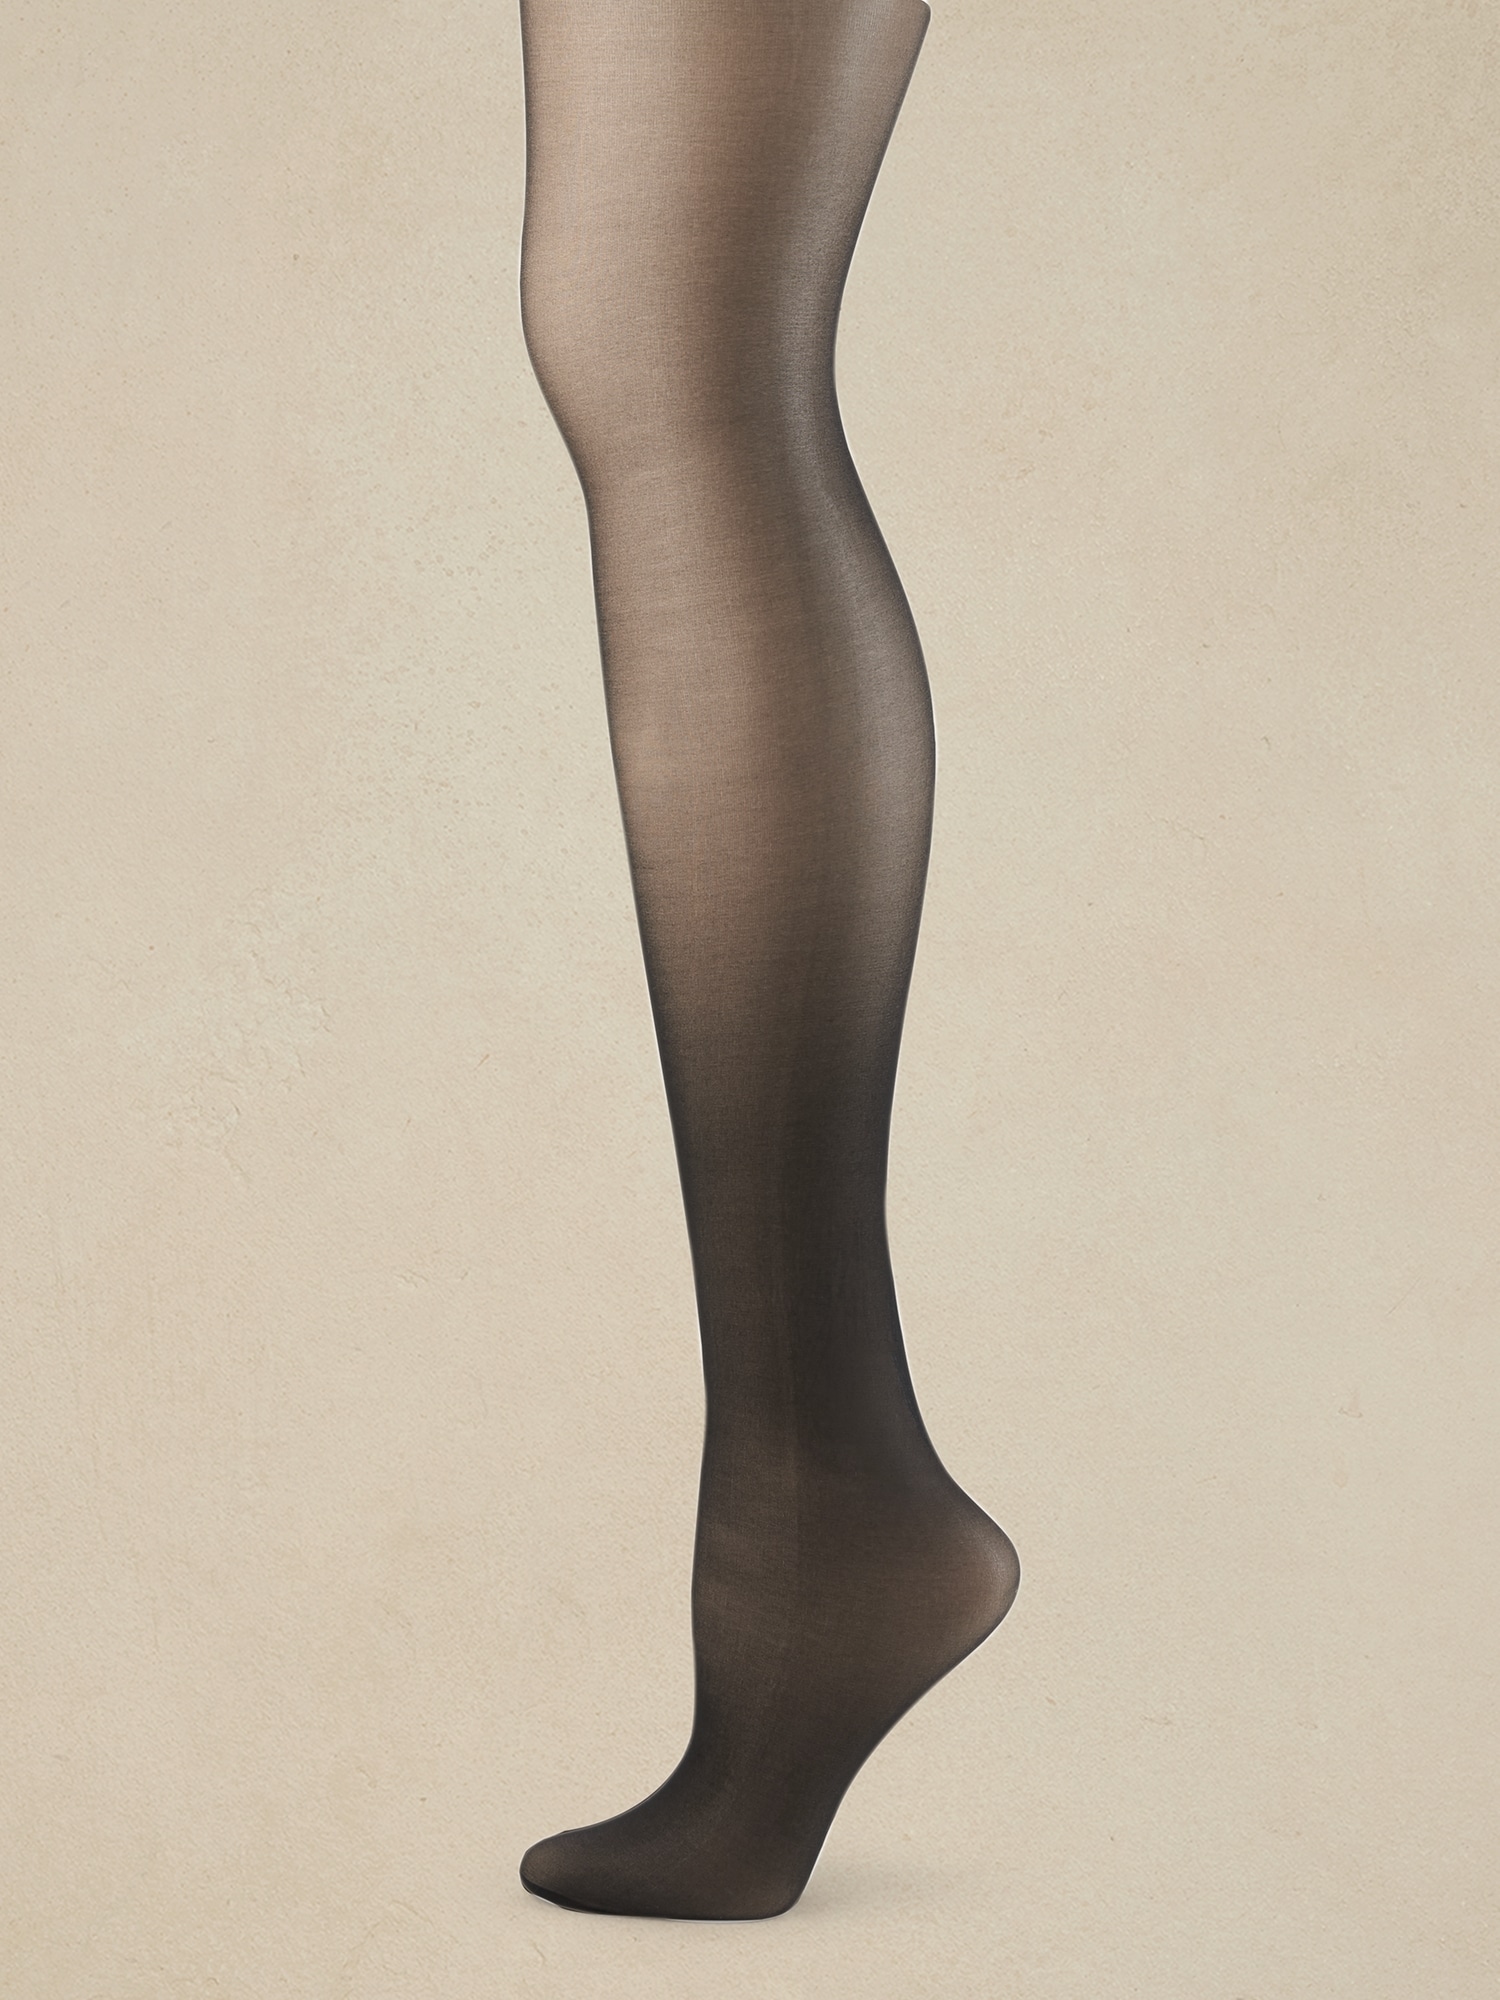 Women's Control Top Sheer Full Footed Panty Hose Hosiery Stockings